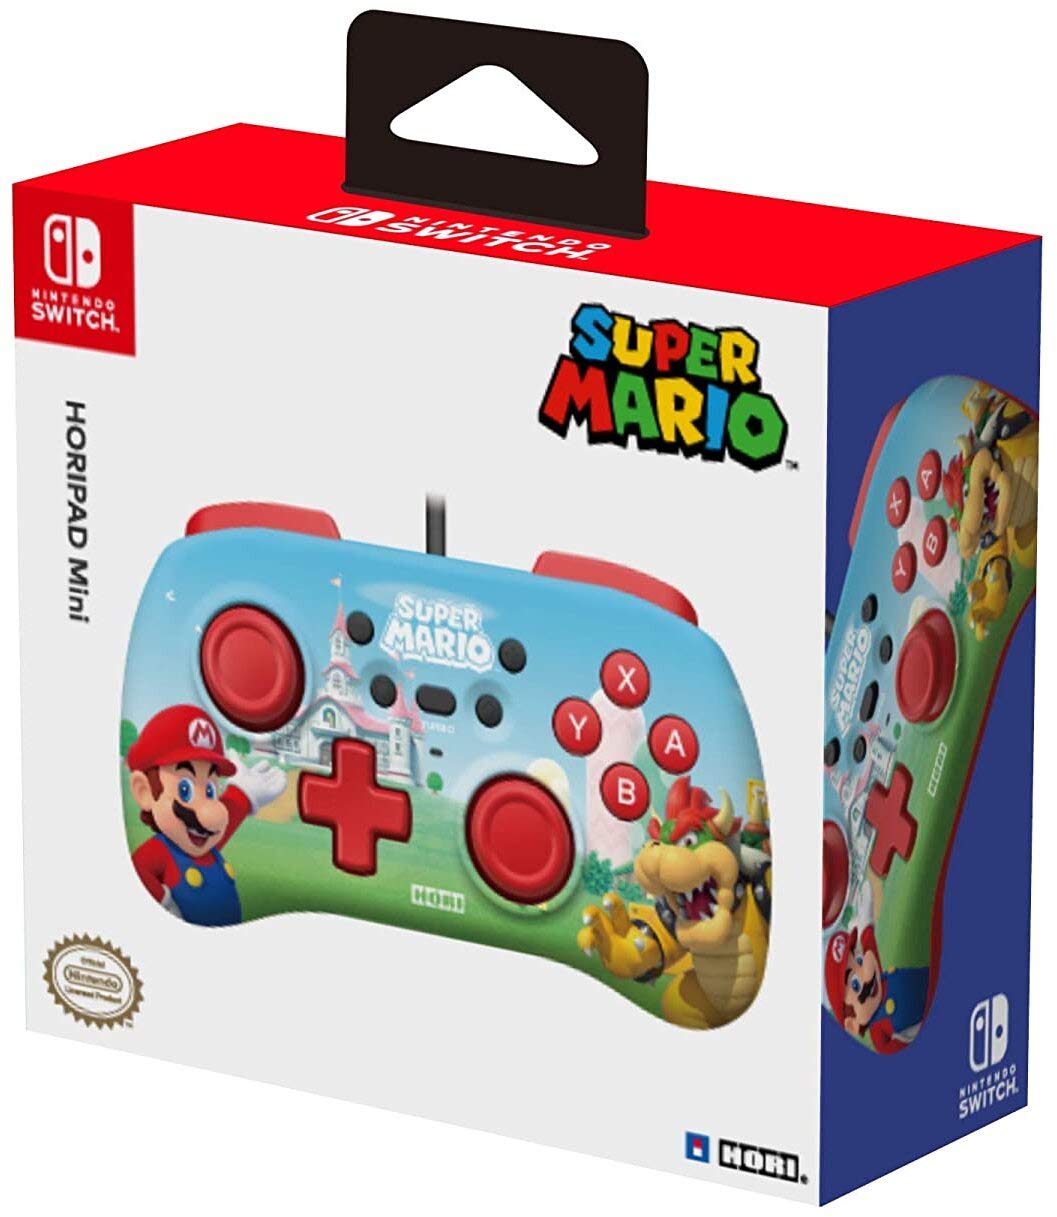 HORI Horipad Mini (Super Mario) Controller für Nintendo Switch - Offiziell Lizenziert